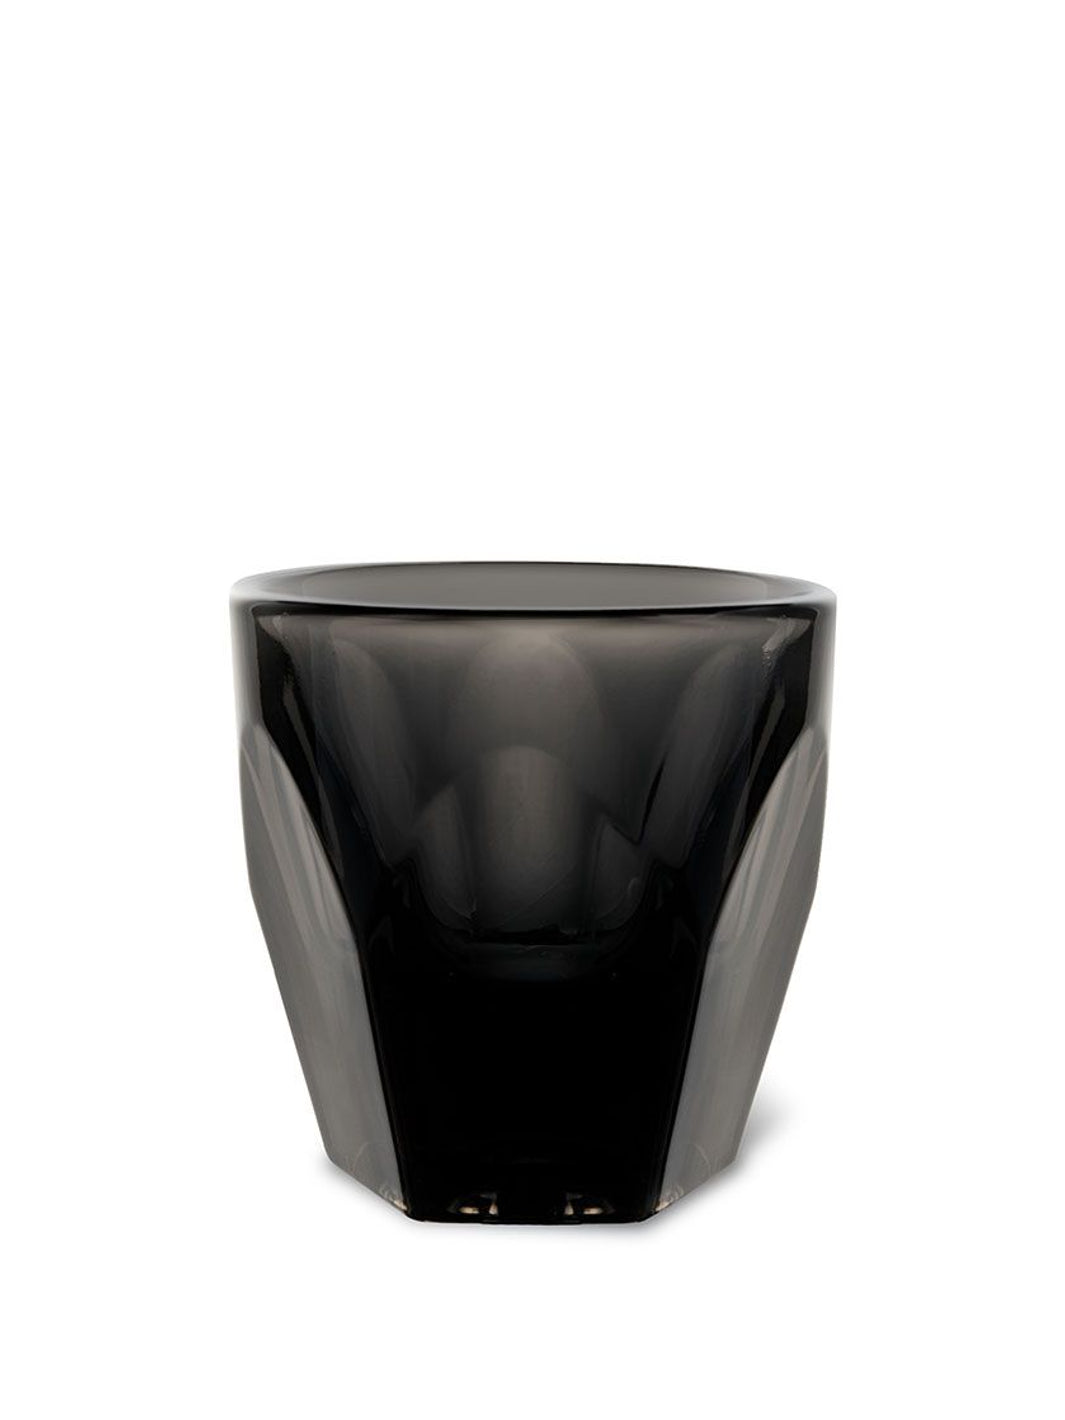 Glass Vero Smoke Cortado - 125ml - notNeutral - Espresso Gear